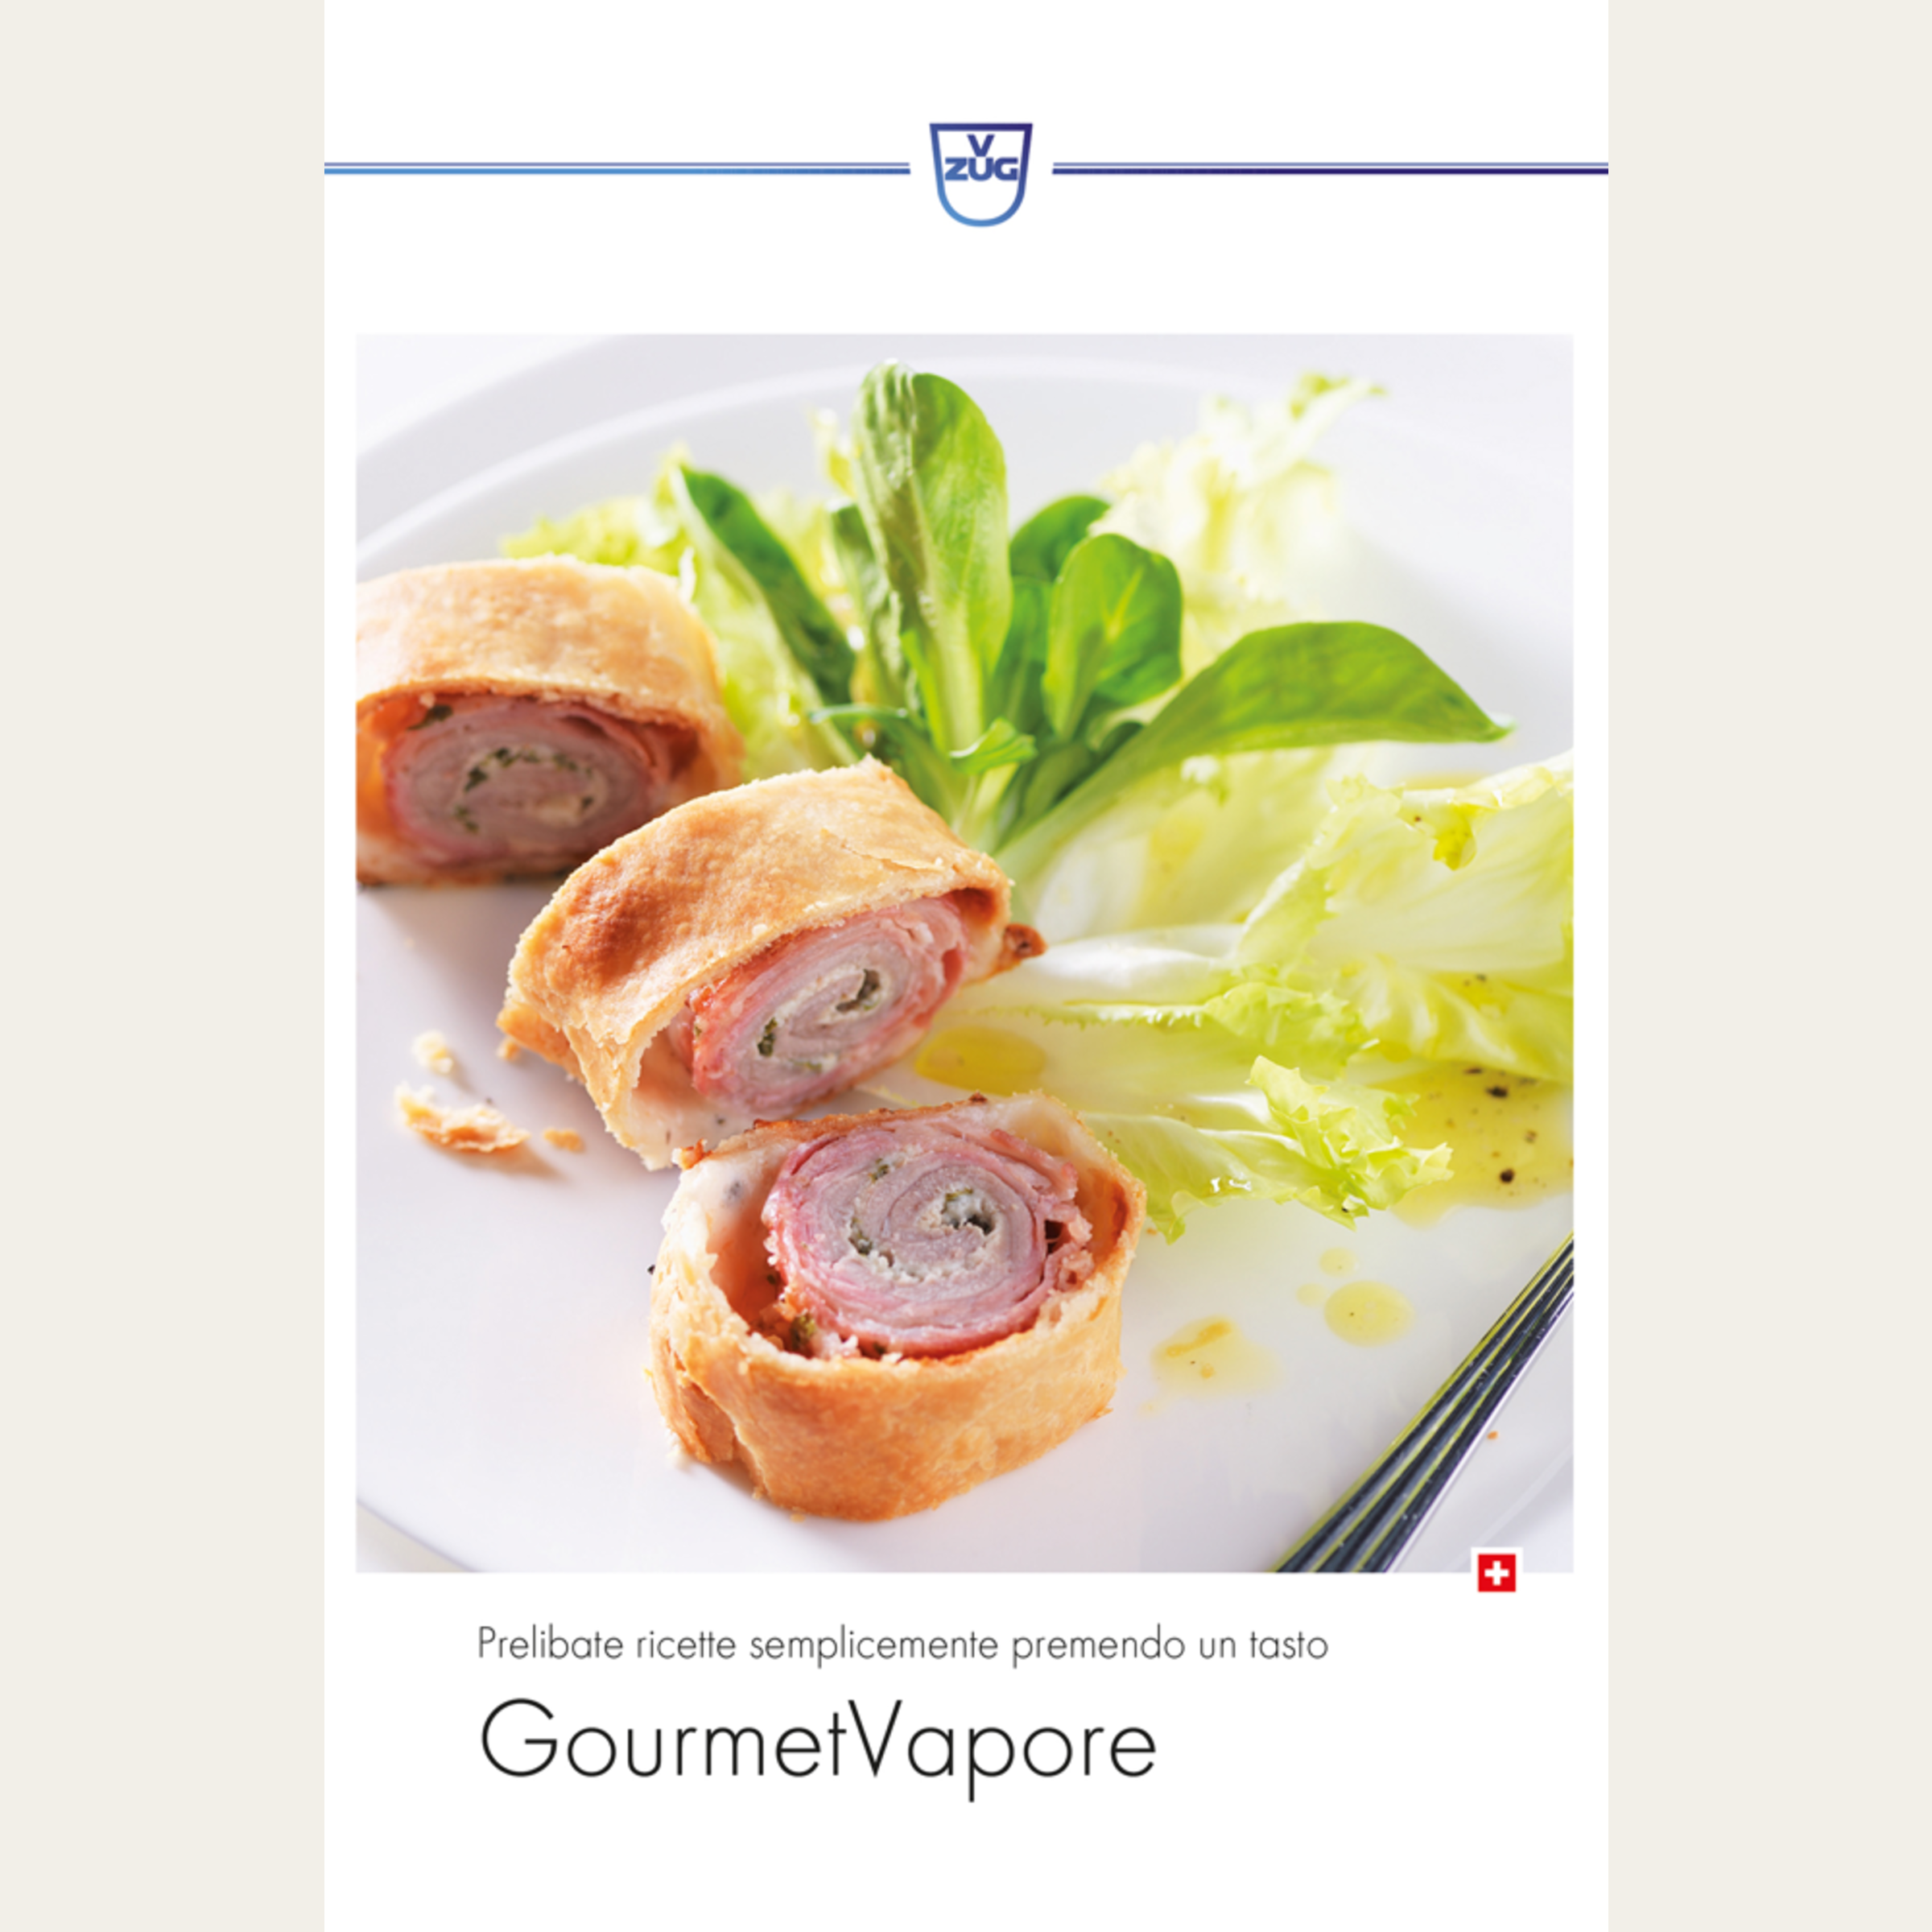 Ricettario italiano 'GourmetVapore' (CH)